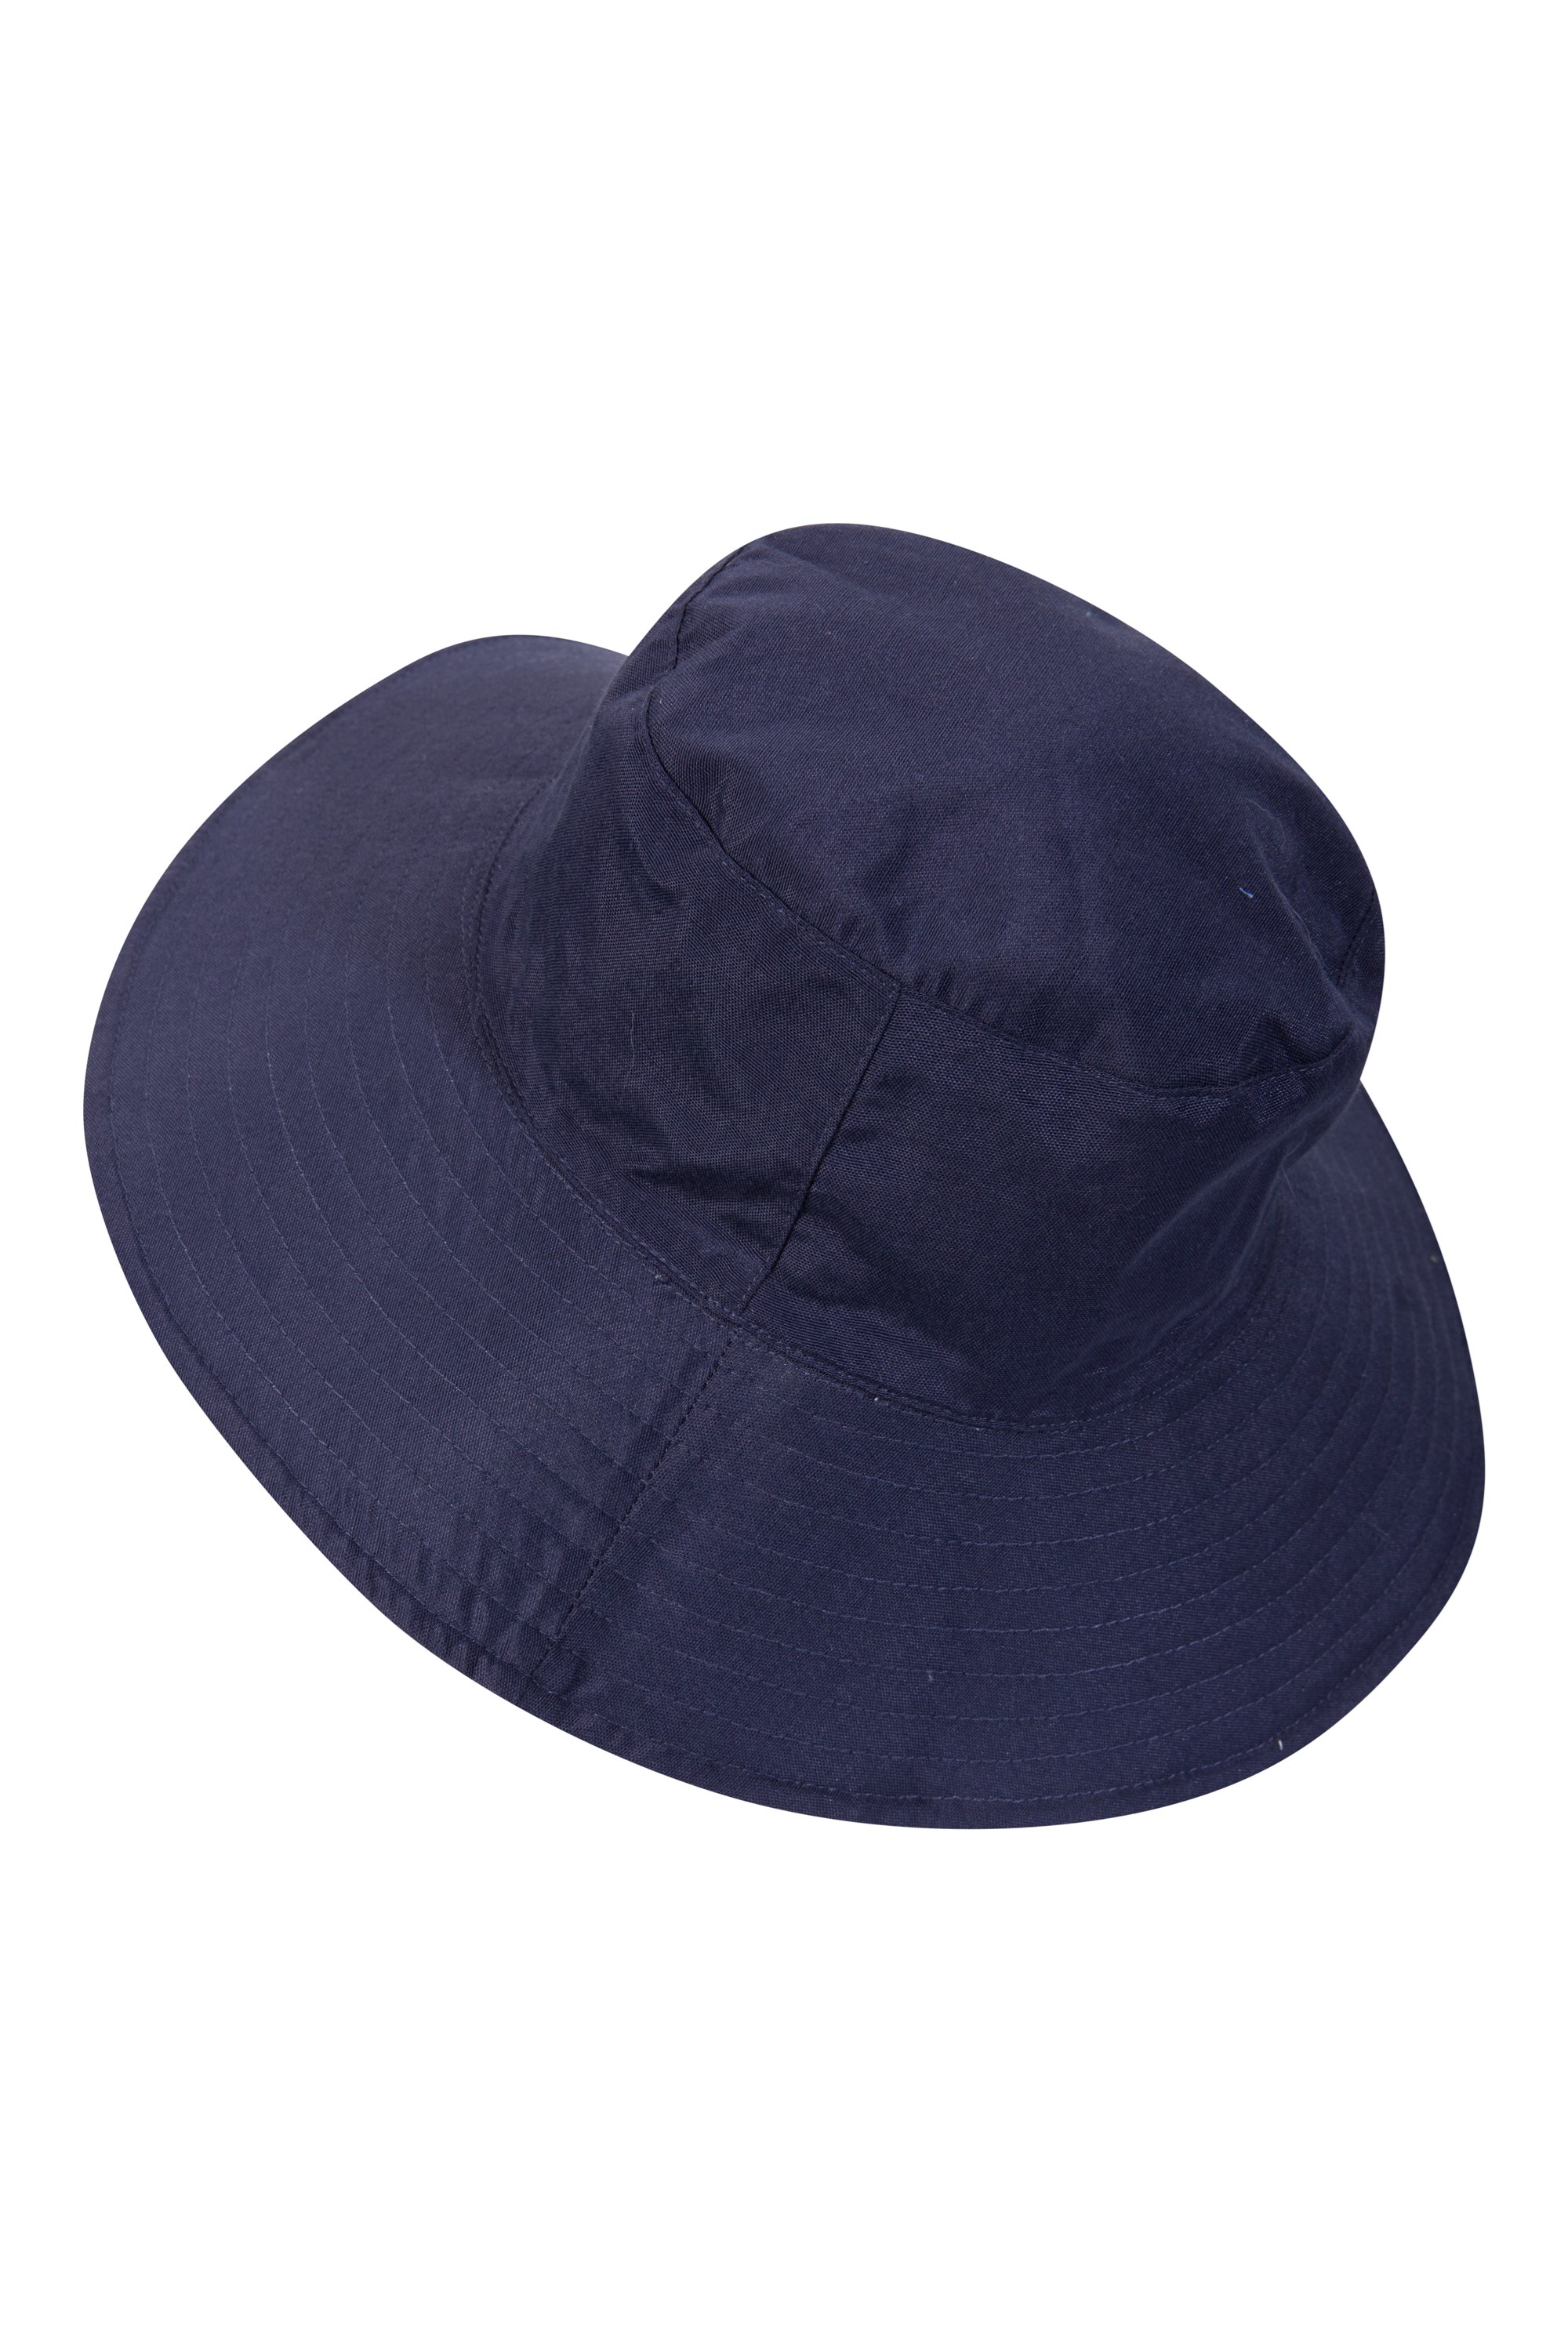 Mountain Warehouse Wms  Reversible Plain Womens Brim Hat In Blue One Size 